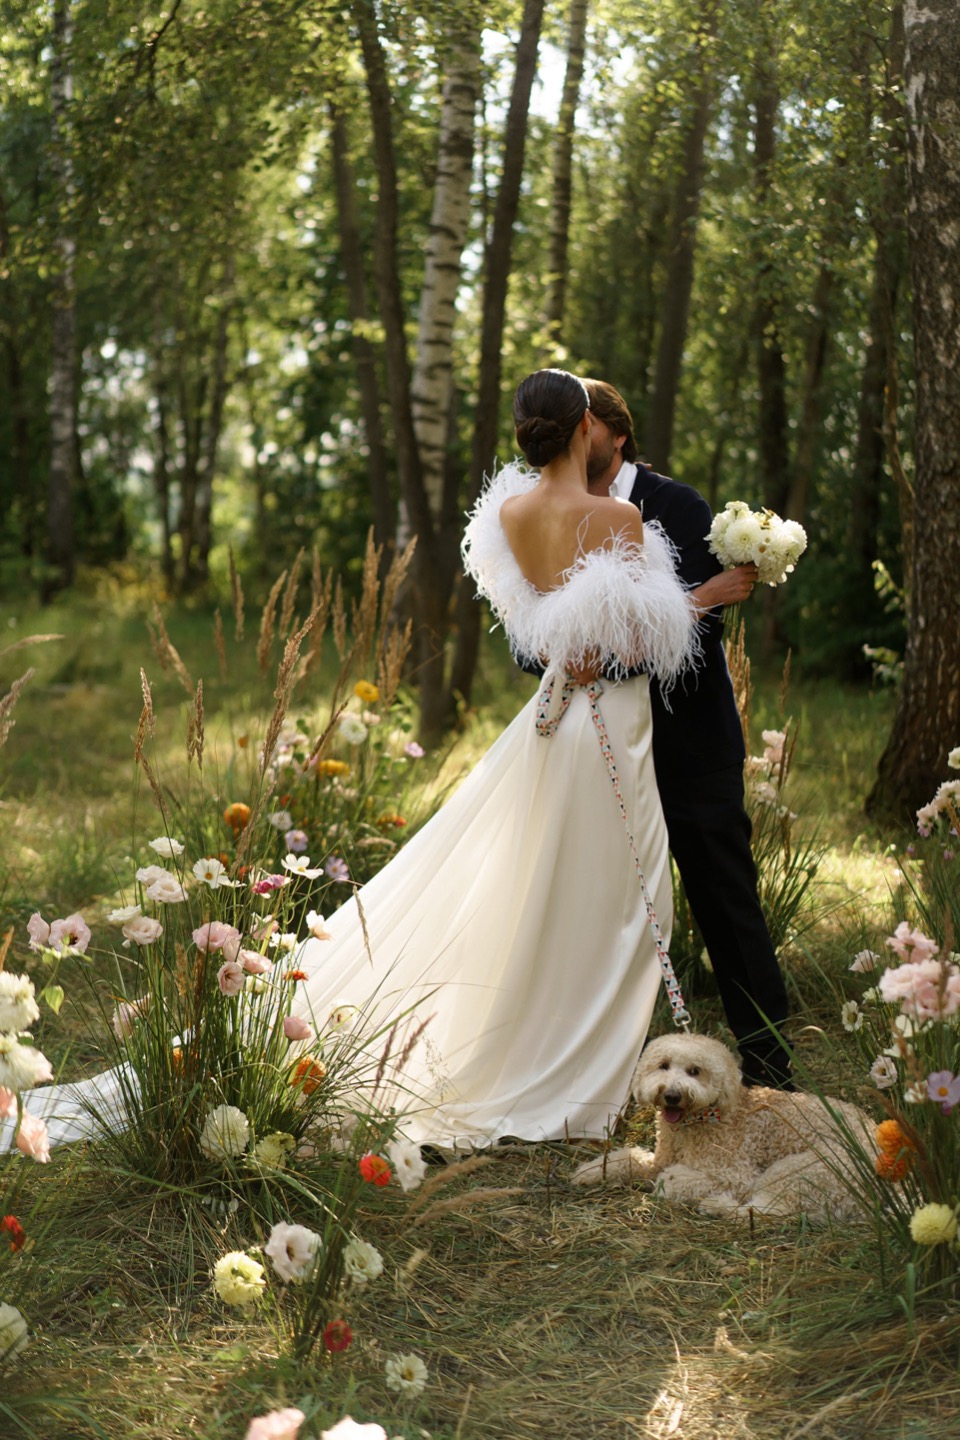 What a day, what a wedding! Свадьба на цветочной поляне